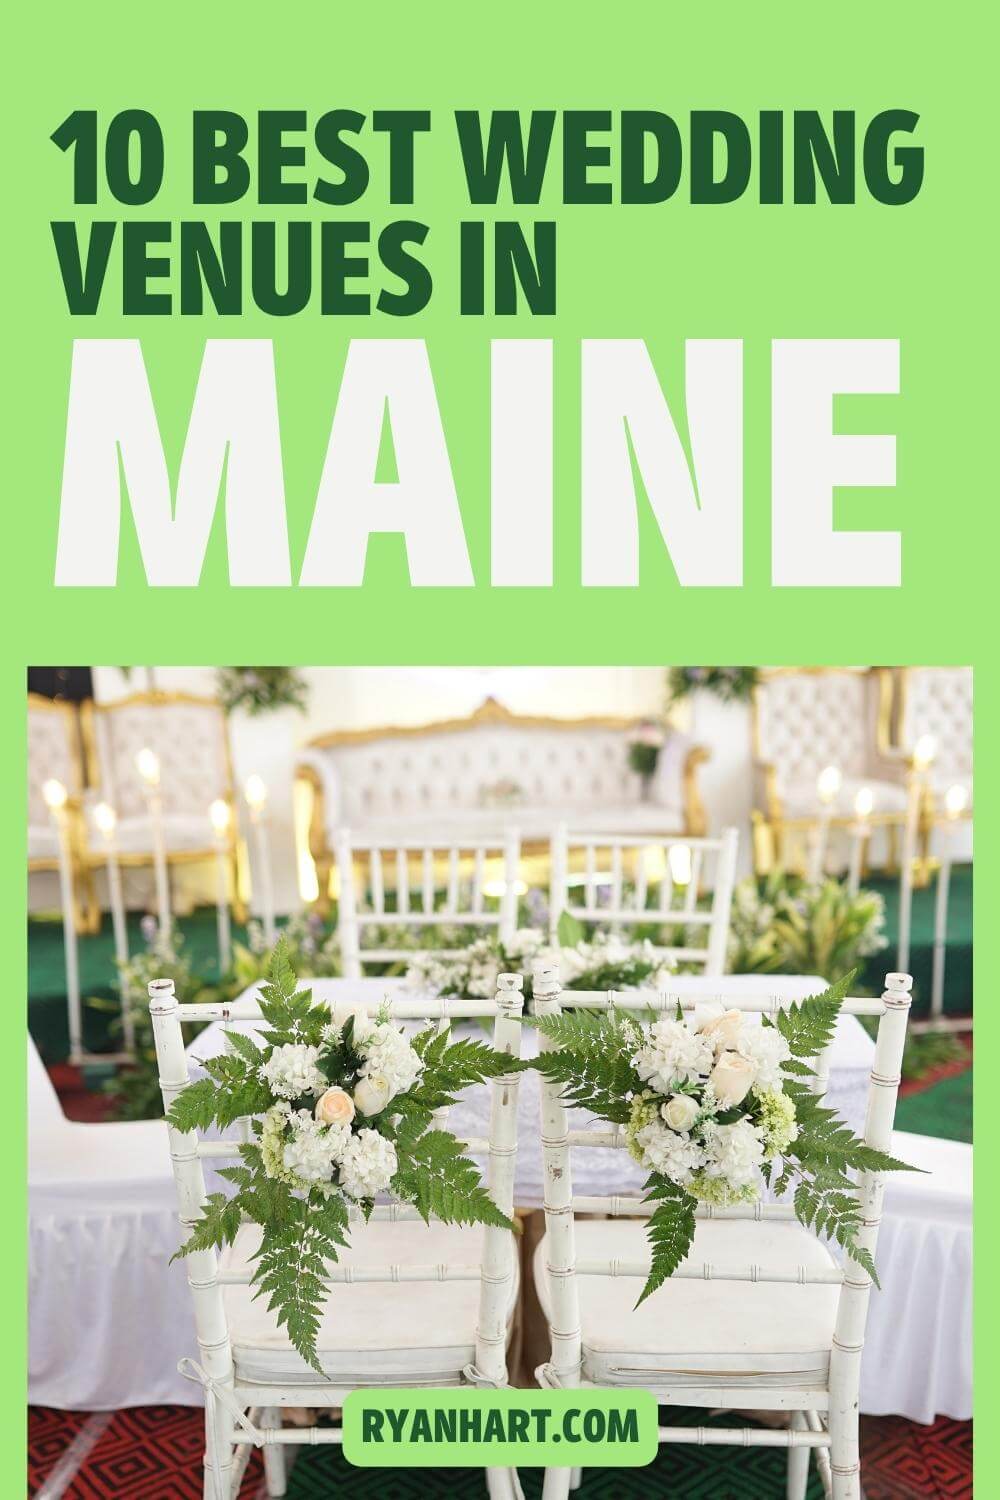 New England wedding venues